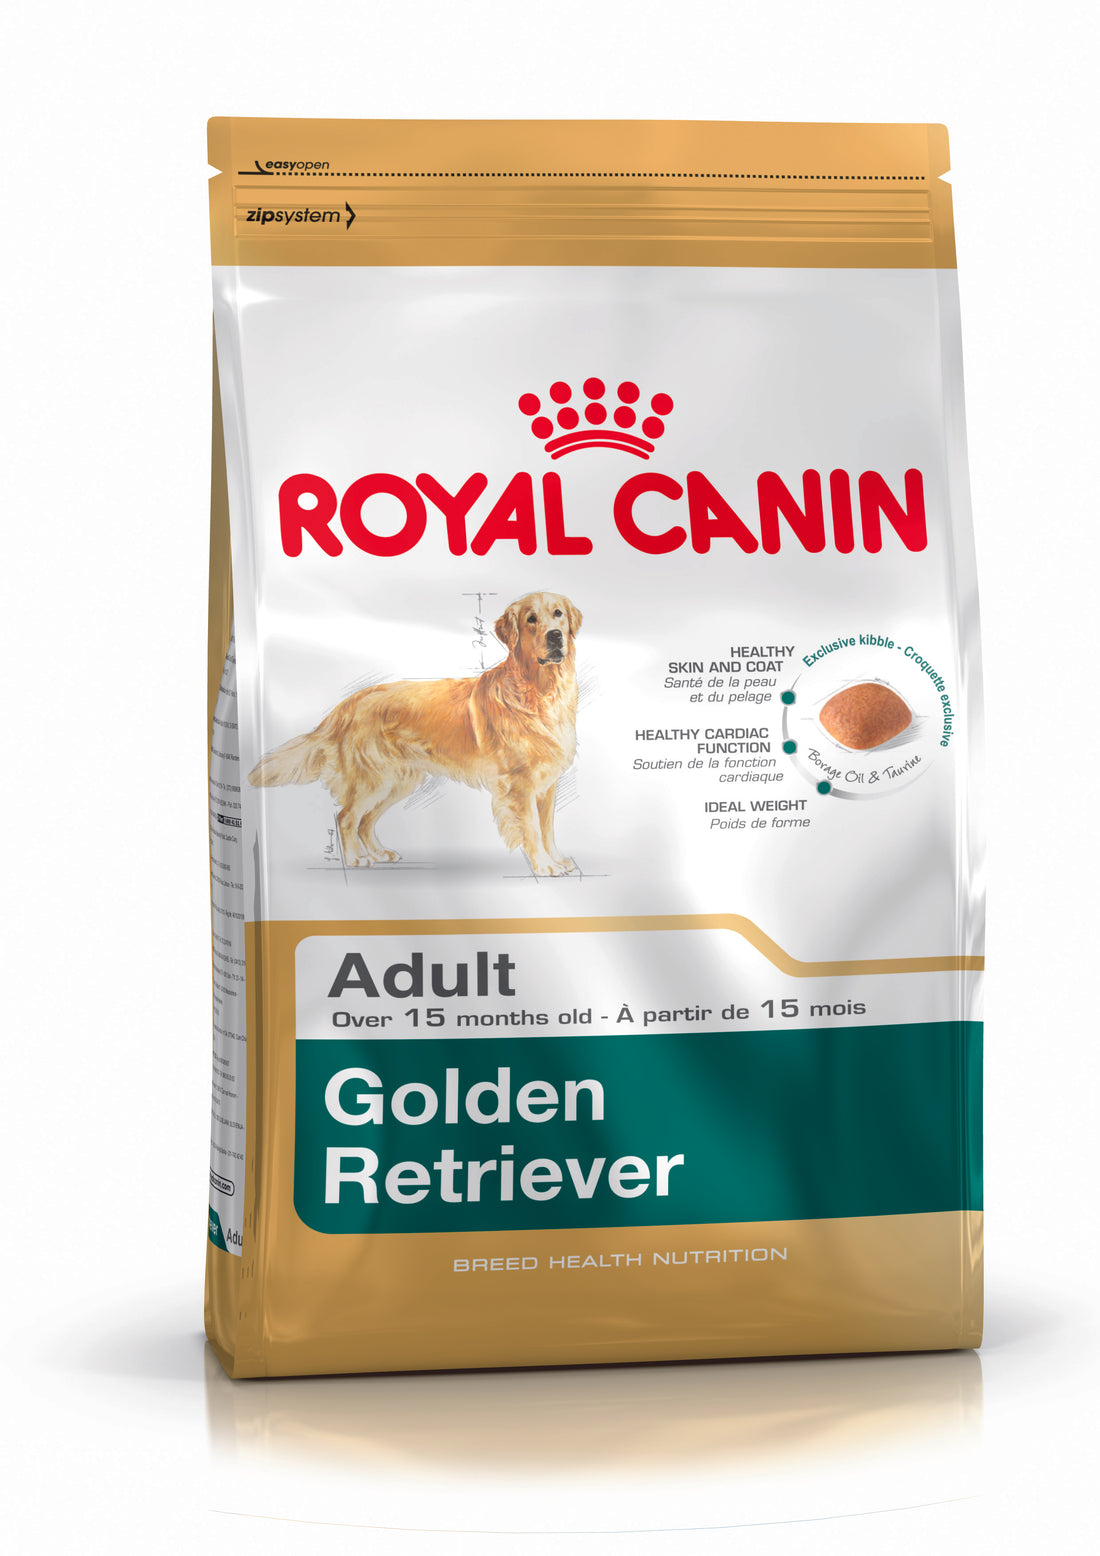 Royal Canin-Golden Retriever Dog Food 12Kg